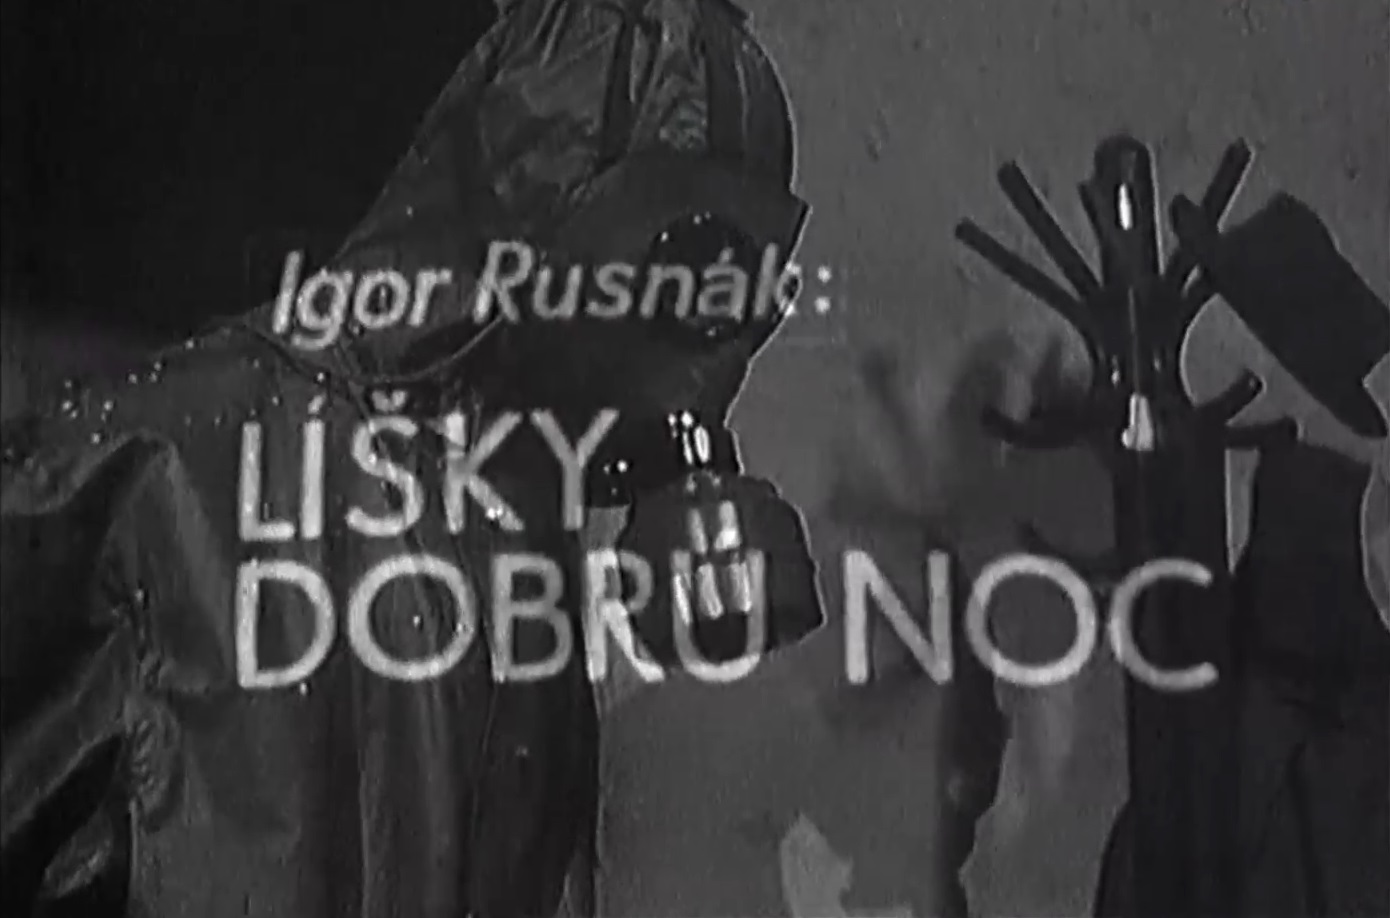 Stiahni si Filmy CZ/SK dabing Lisky, dobru noc (1968)(SK)[TvRip]